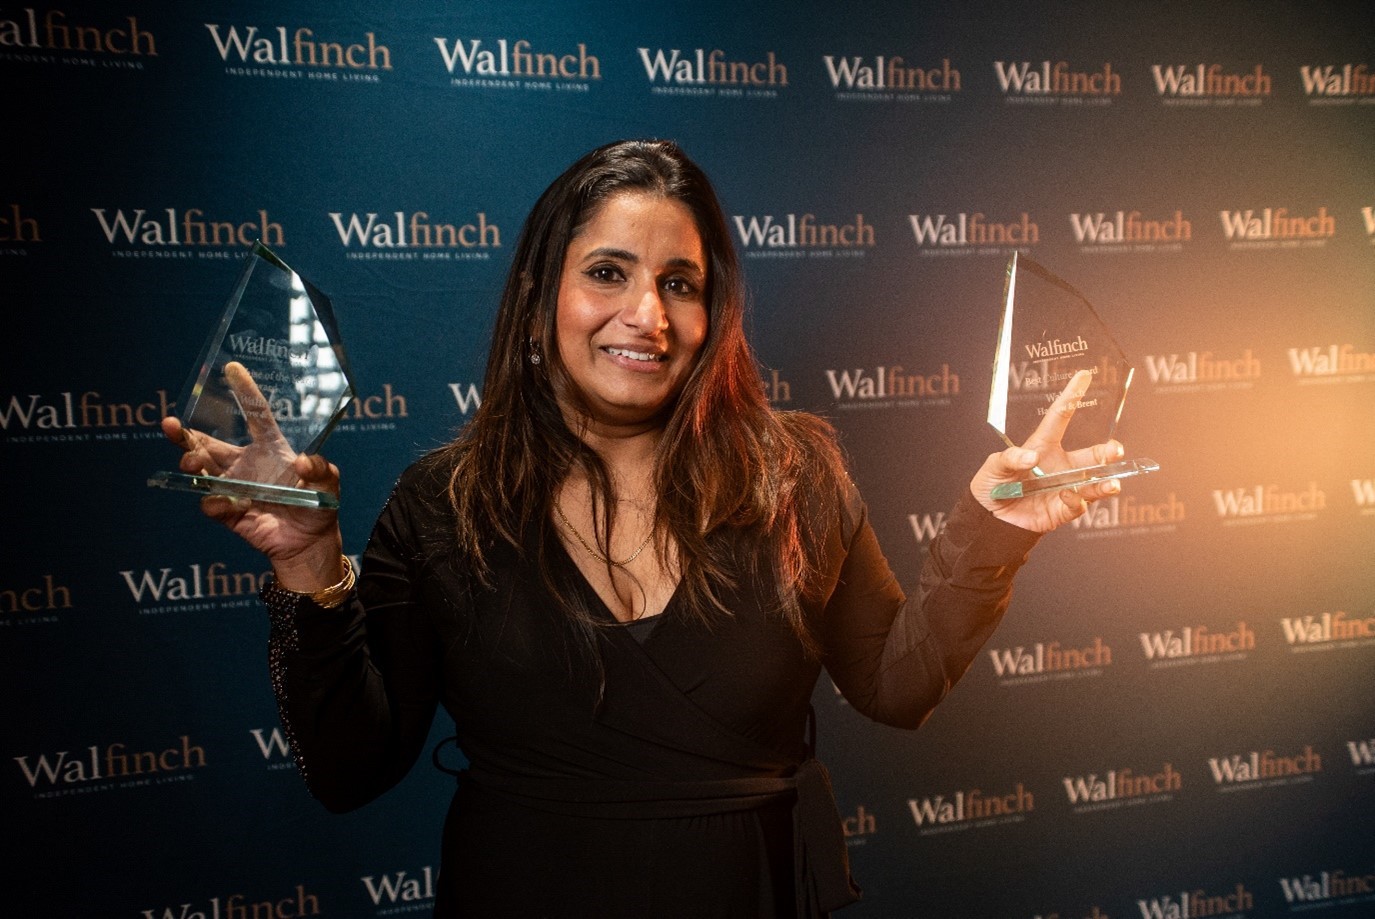 Walfinch Franchise Franchisee Shilpi Award